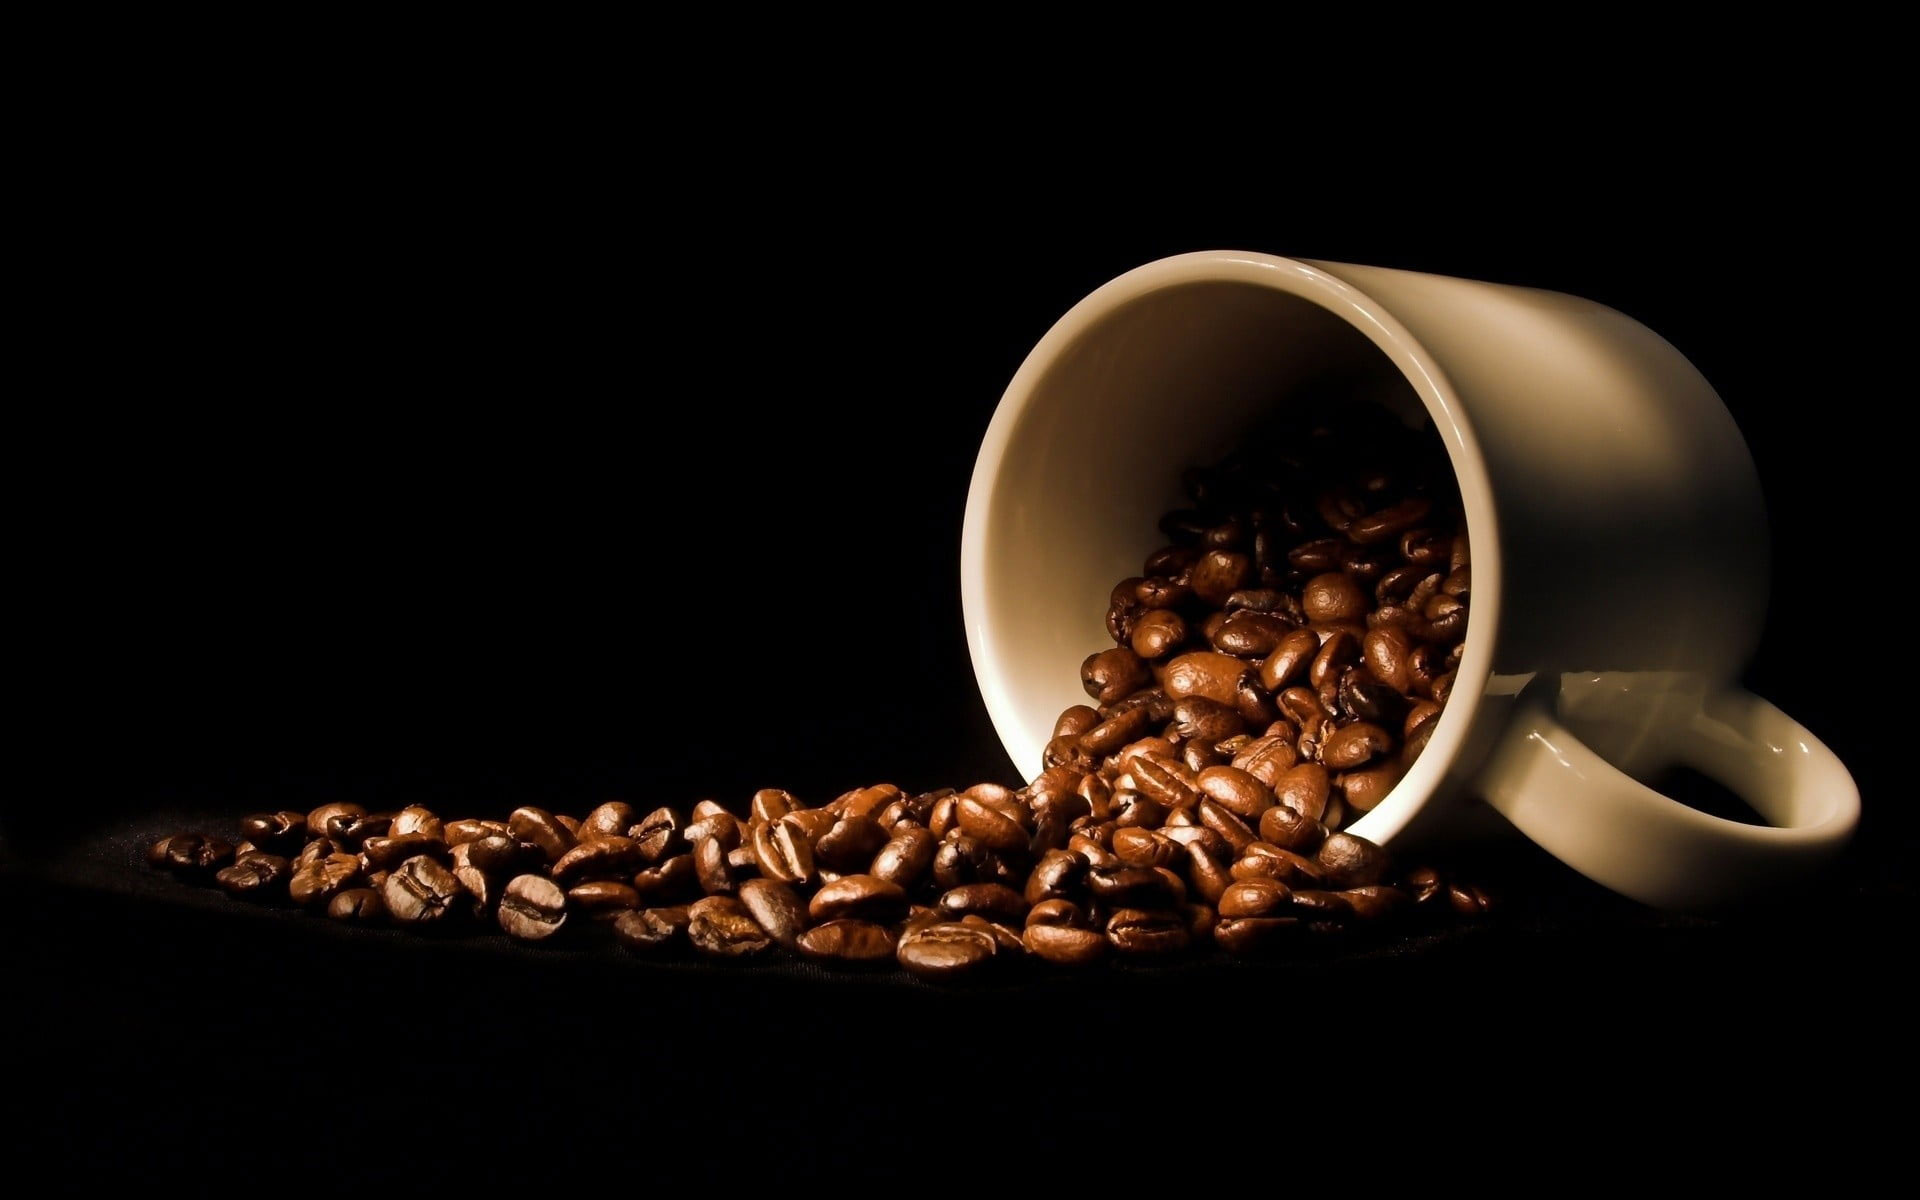 Mug wallpaper, drink, cup, coffee beans, black background